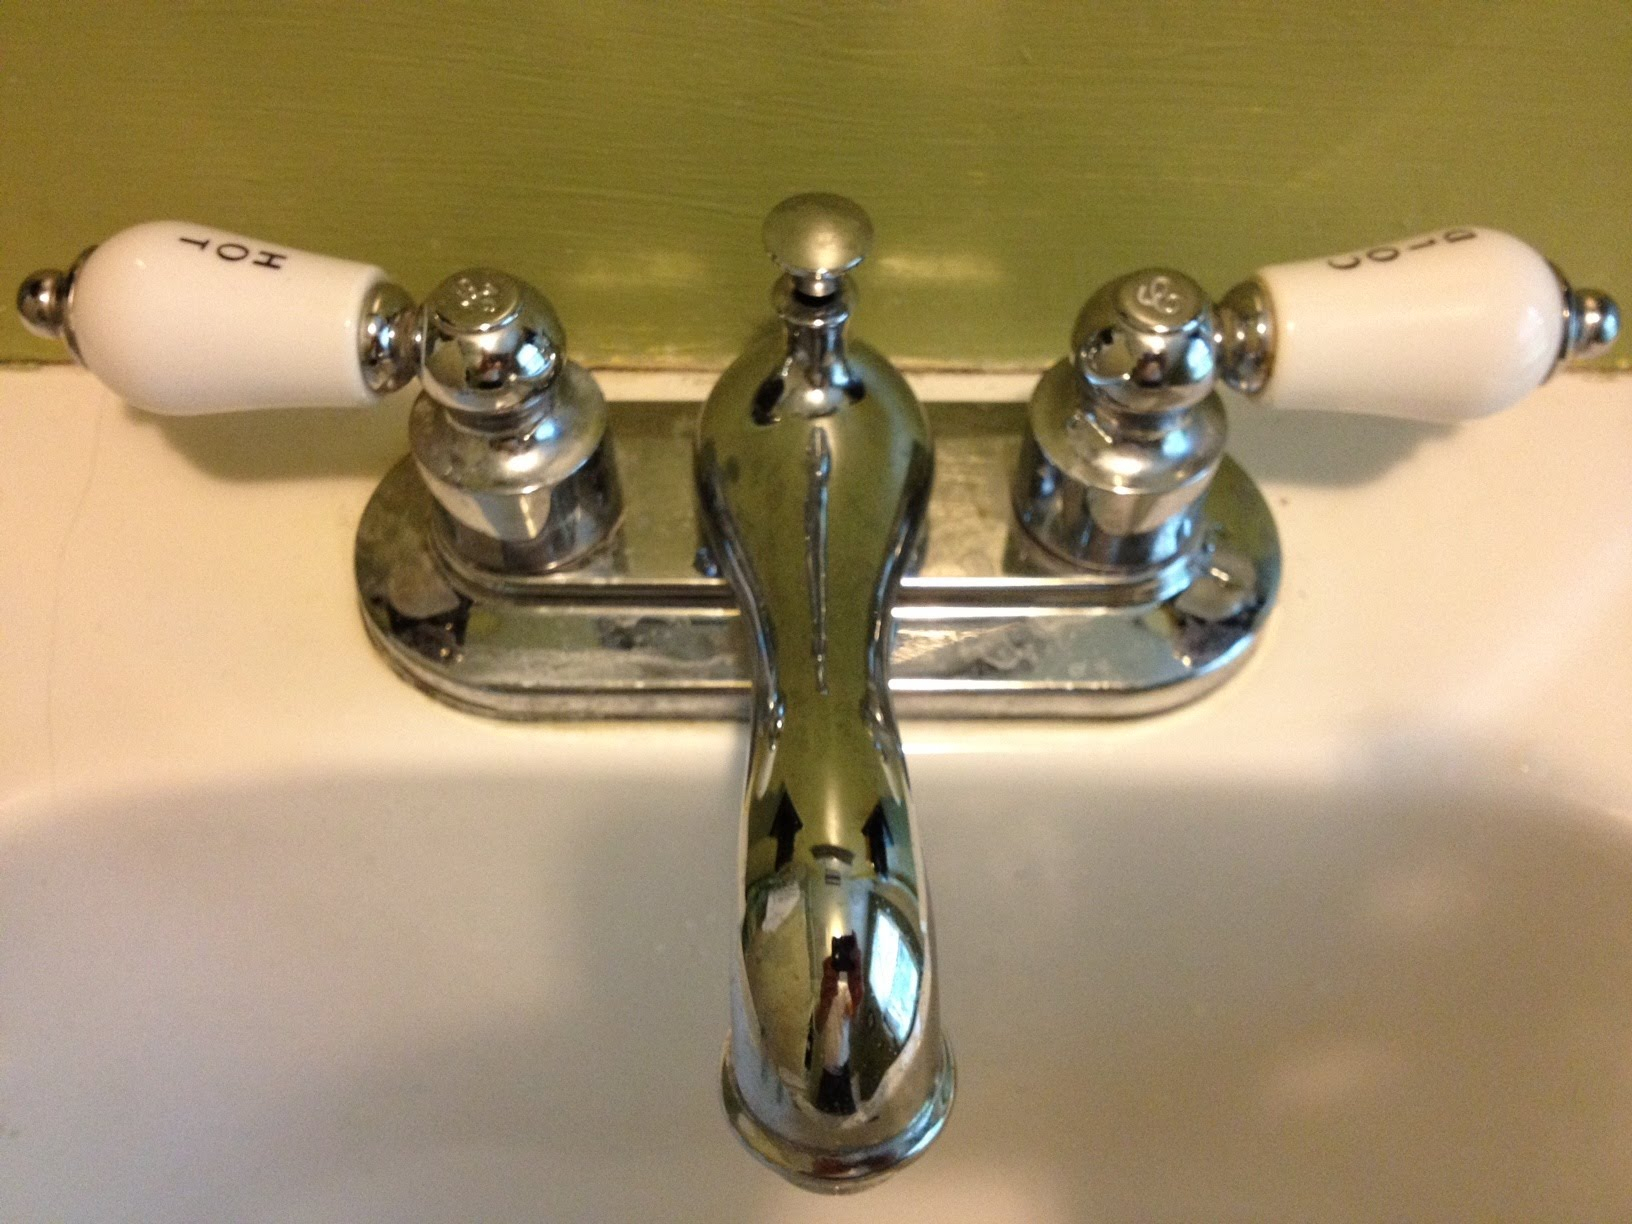 bathroom sink faucet cartridge replacement